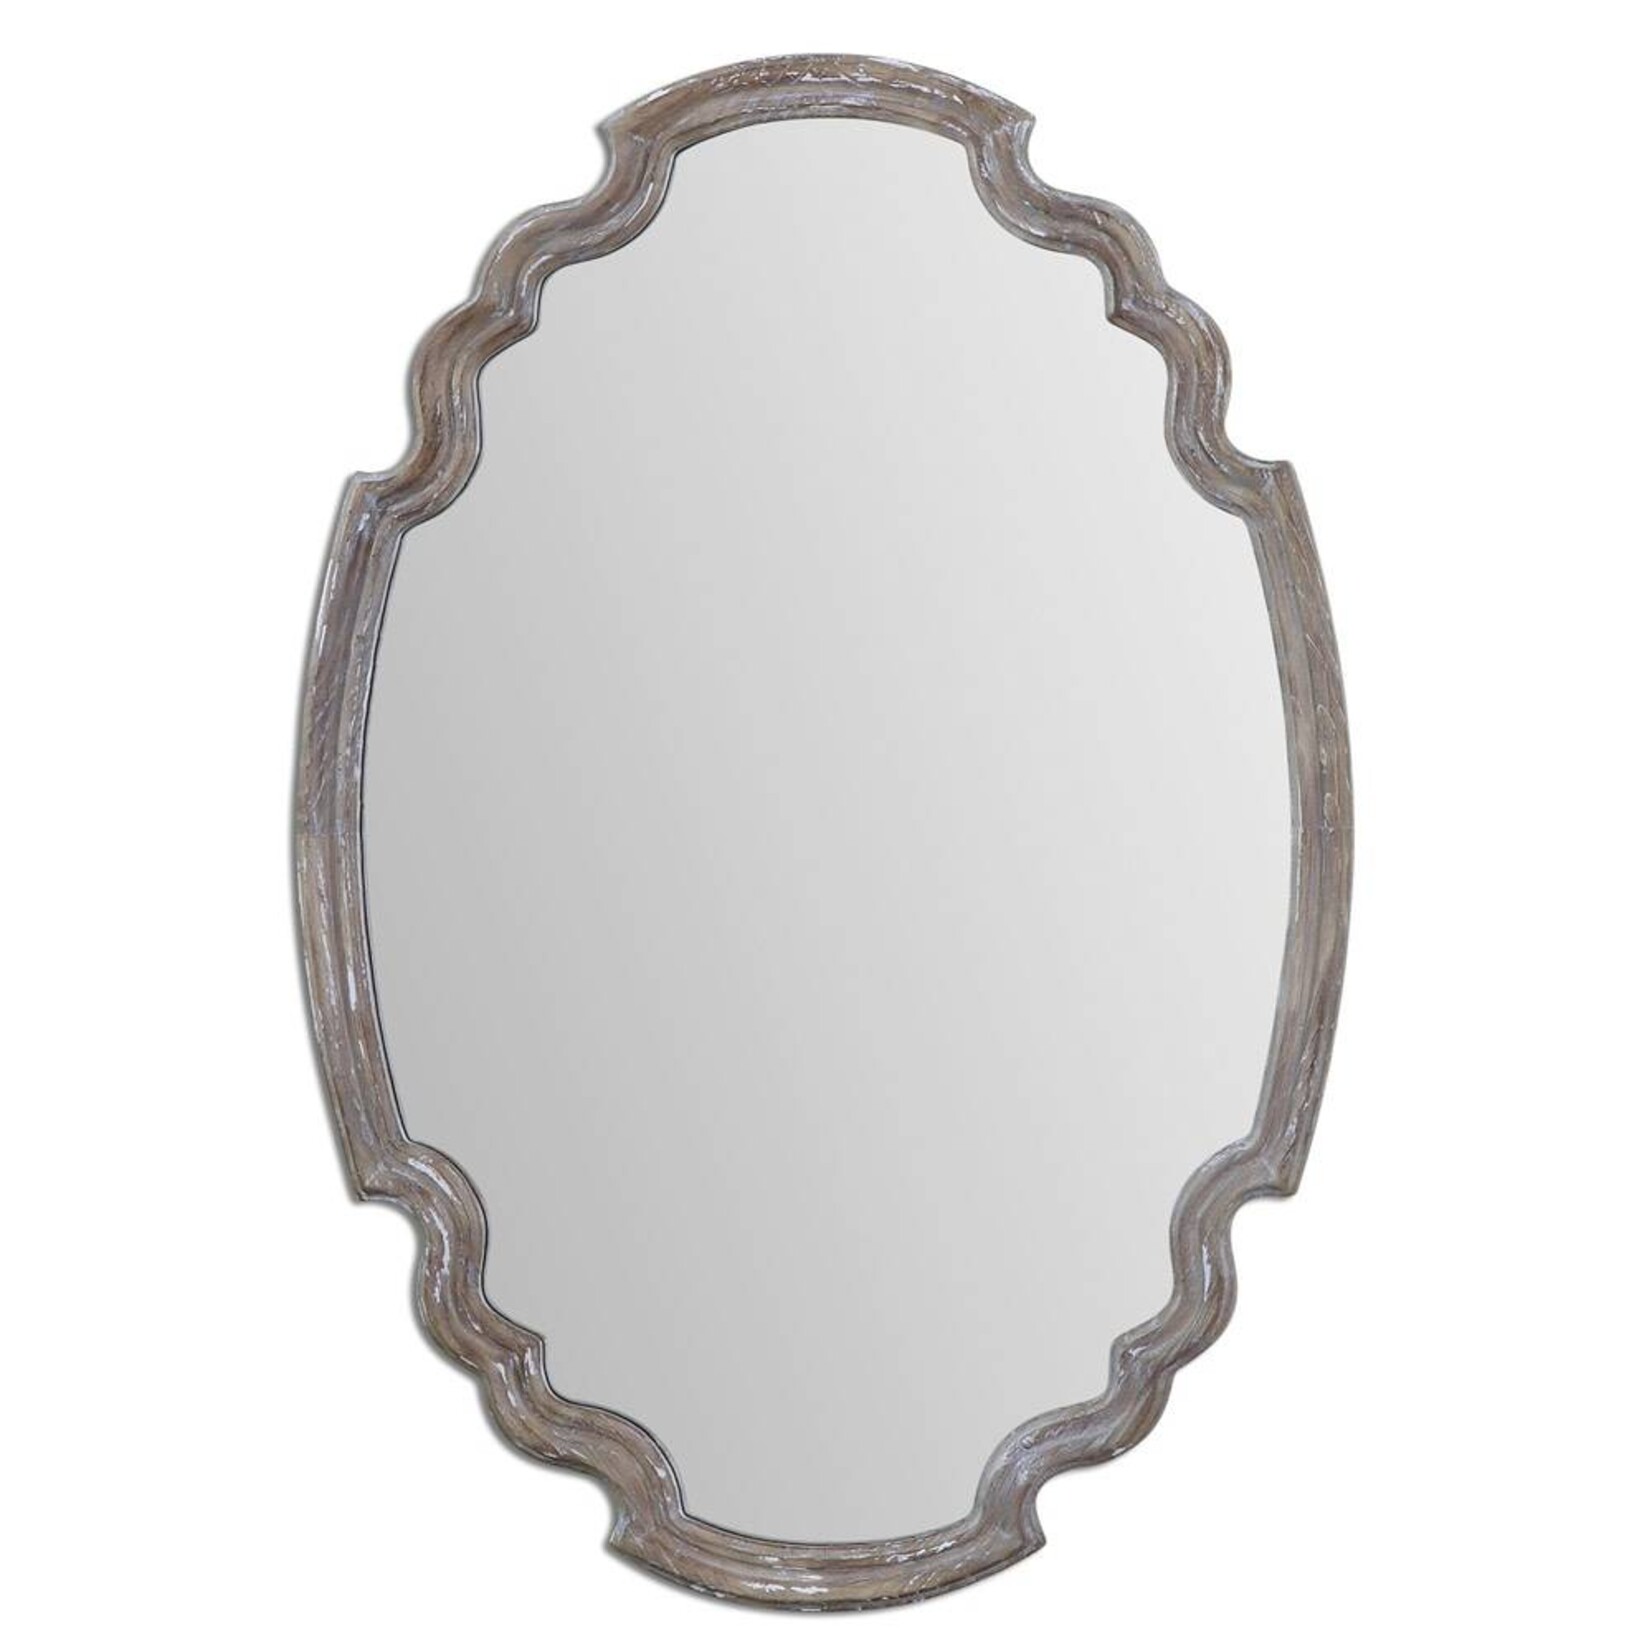 Website *Aged Wood Mirror